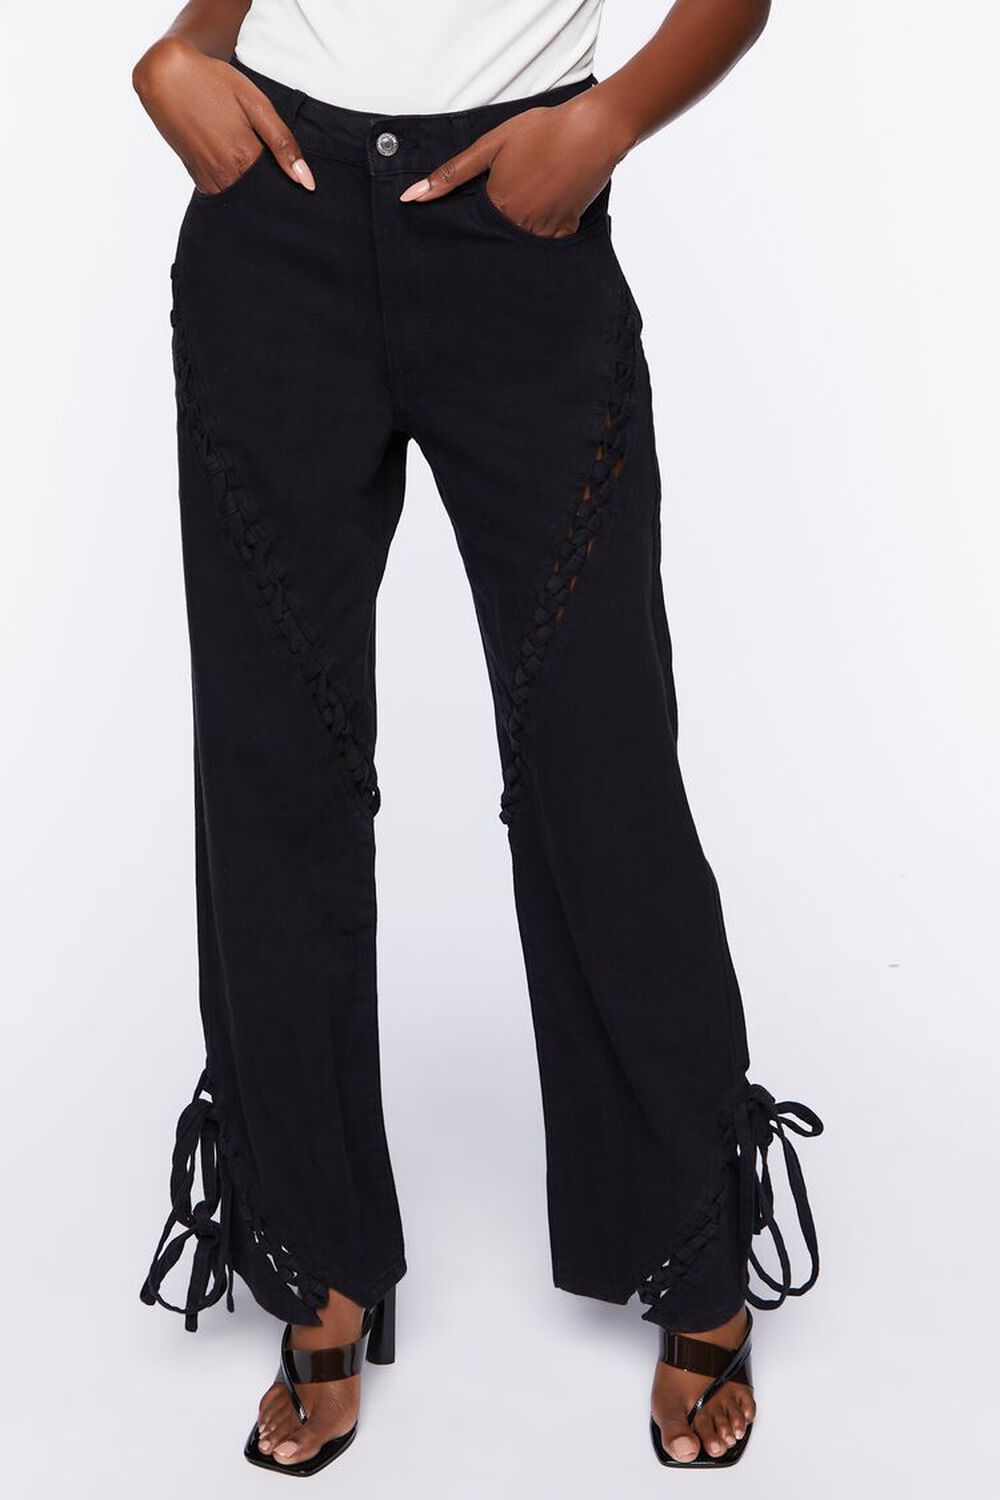 BLACK Lace-Up Straight-Leg Jeans, image 2